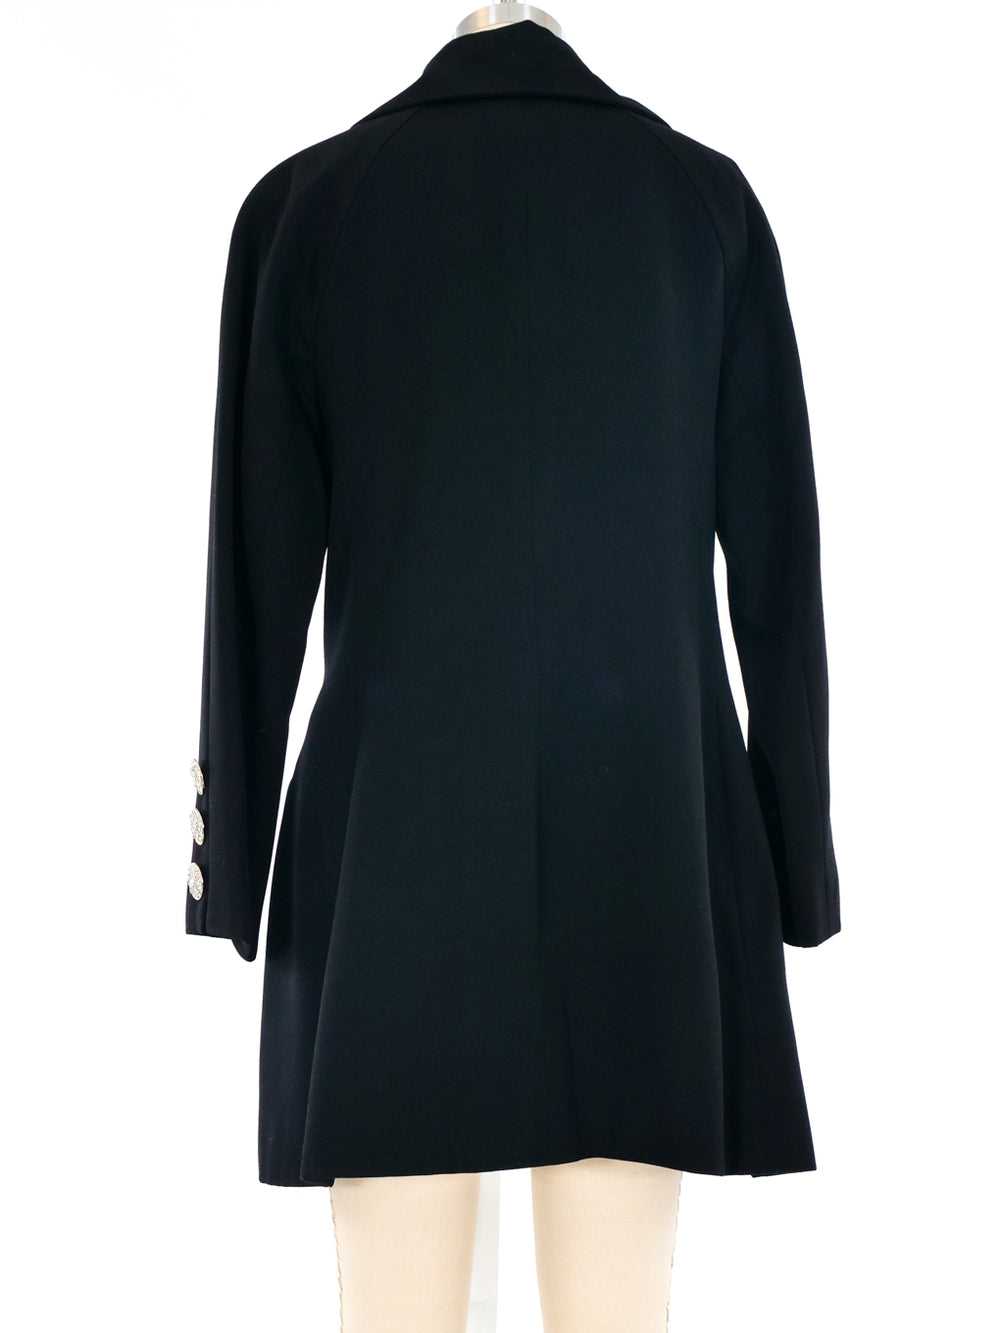 Yves Saint Laurent Wool Evening Jacket - image 4